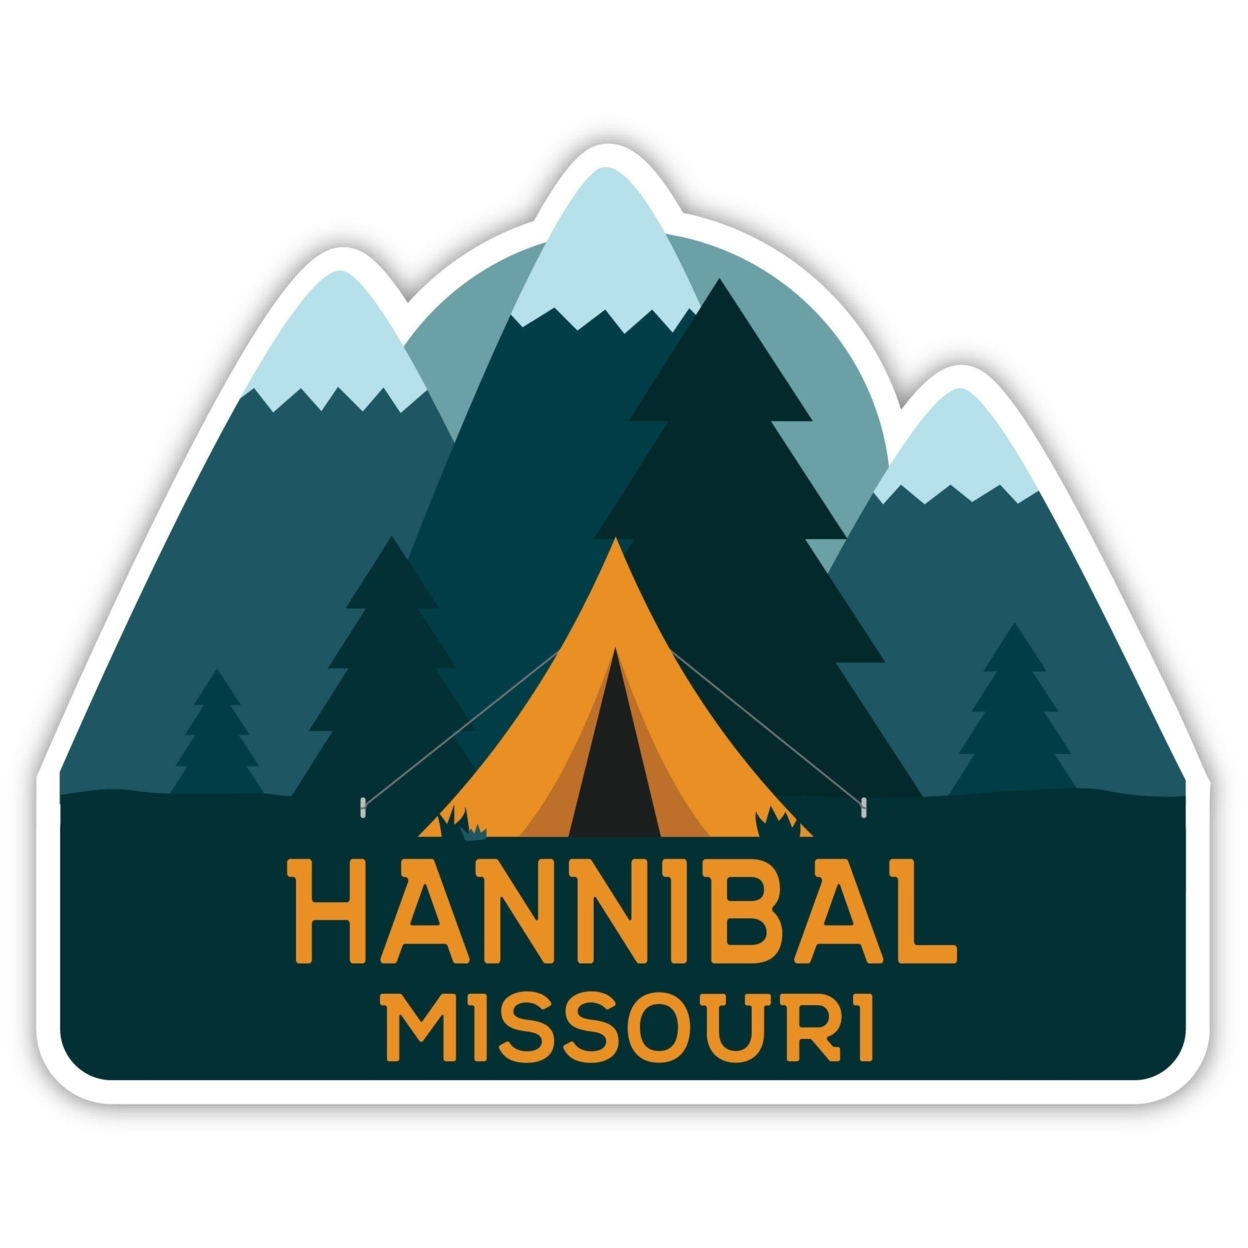 Hannibal Missouri Souvenir Decorative Stickers (Choose Theme And Size) - Single Unit, 4-Inch, Camp Life